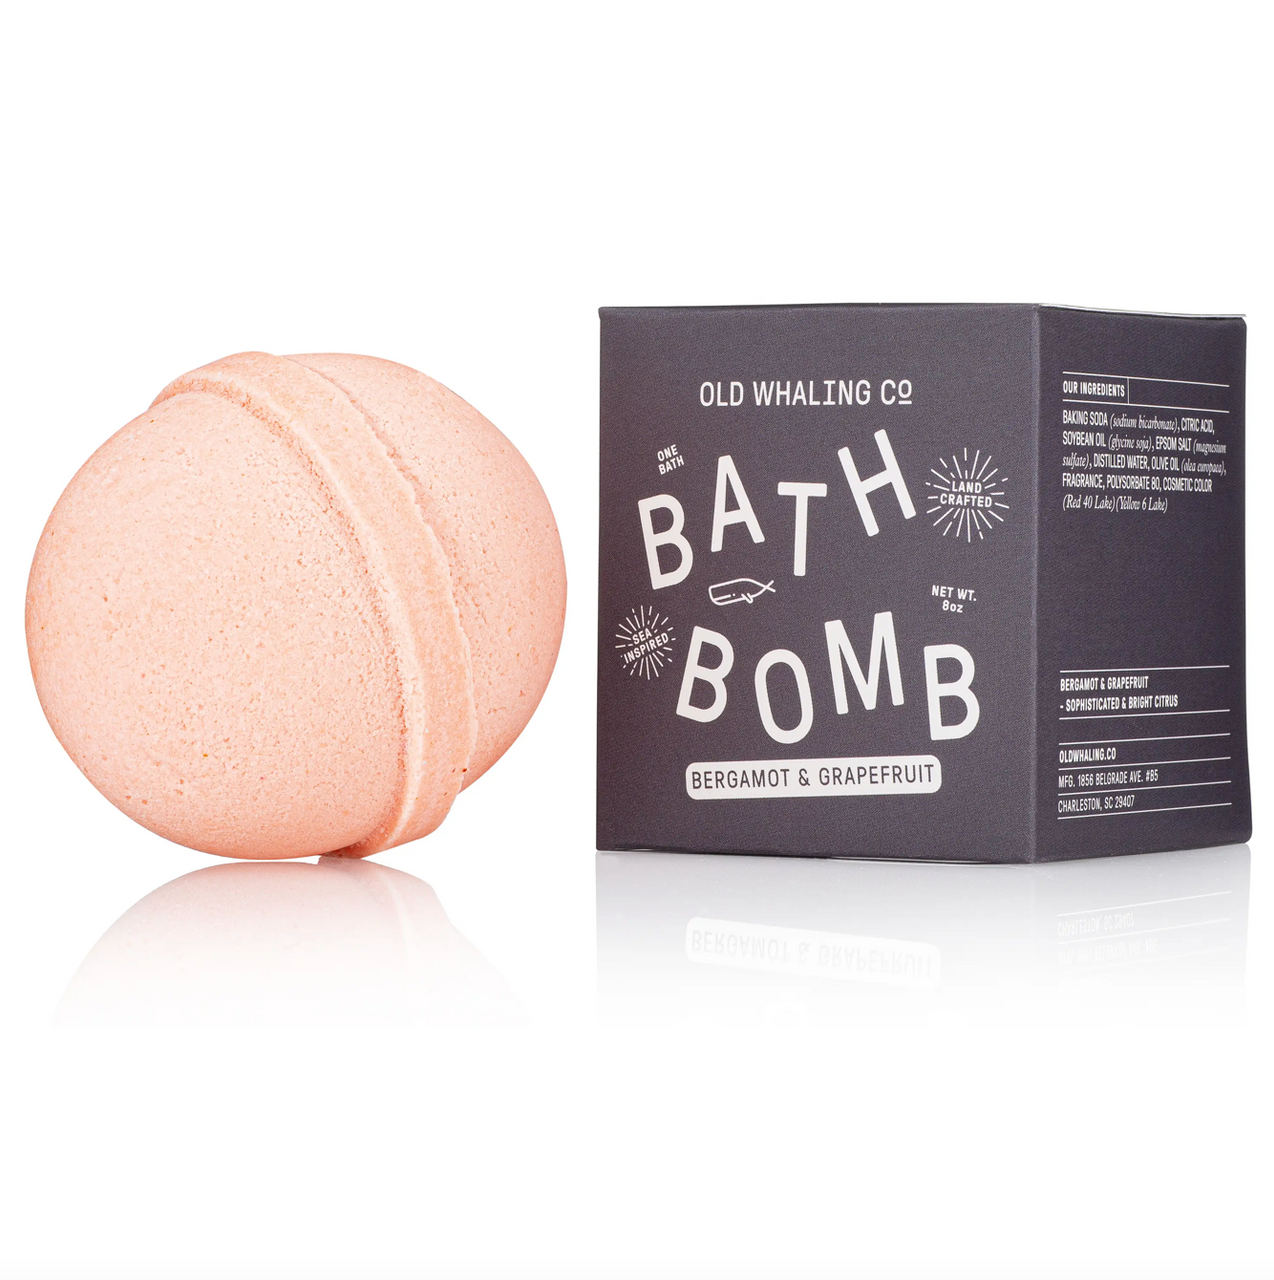 Bergamot & Grapefruit bath bomb - powerandlightpress